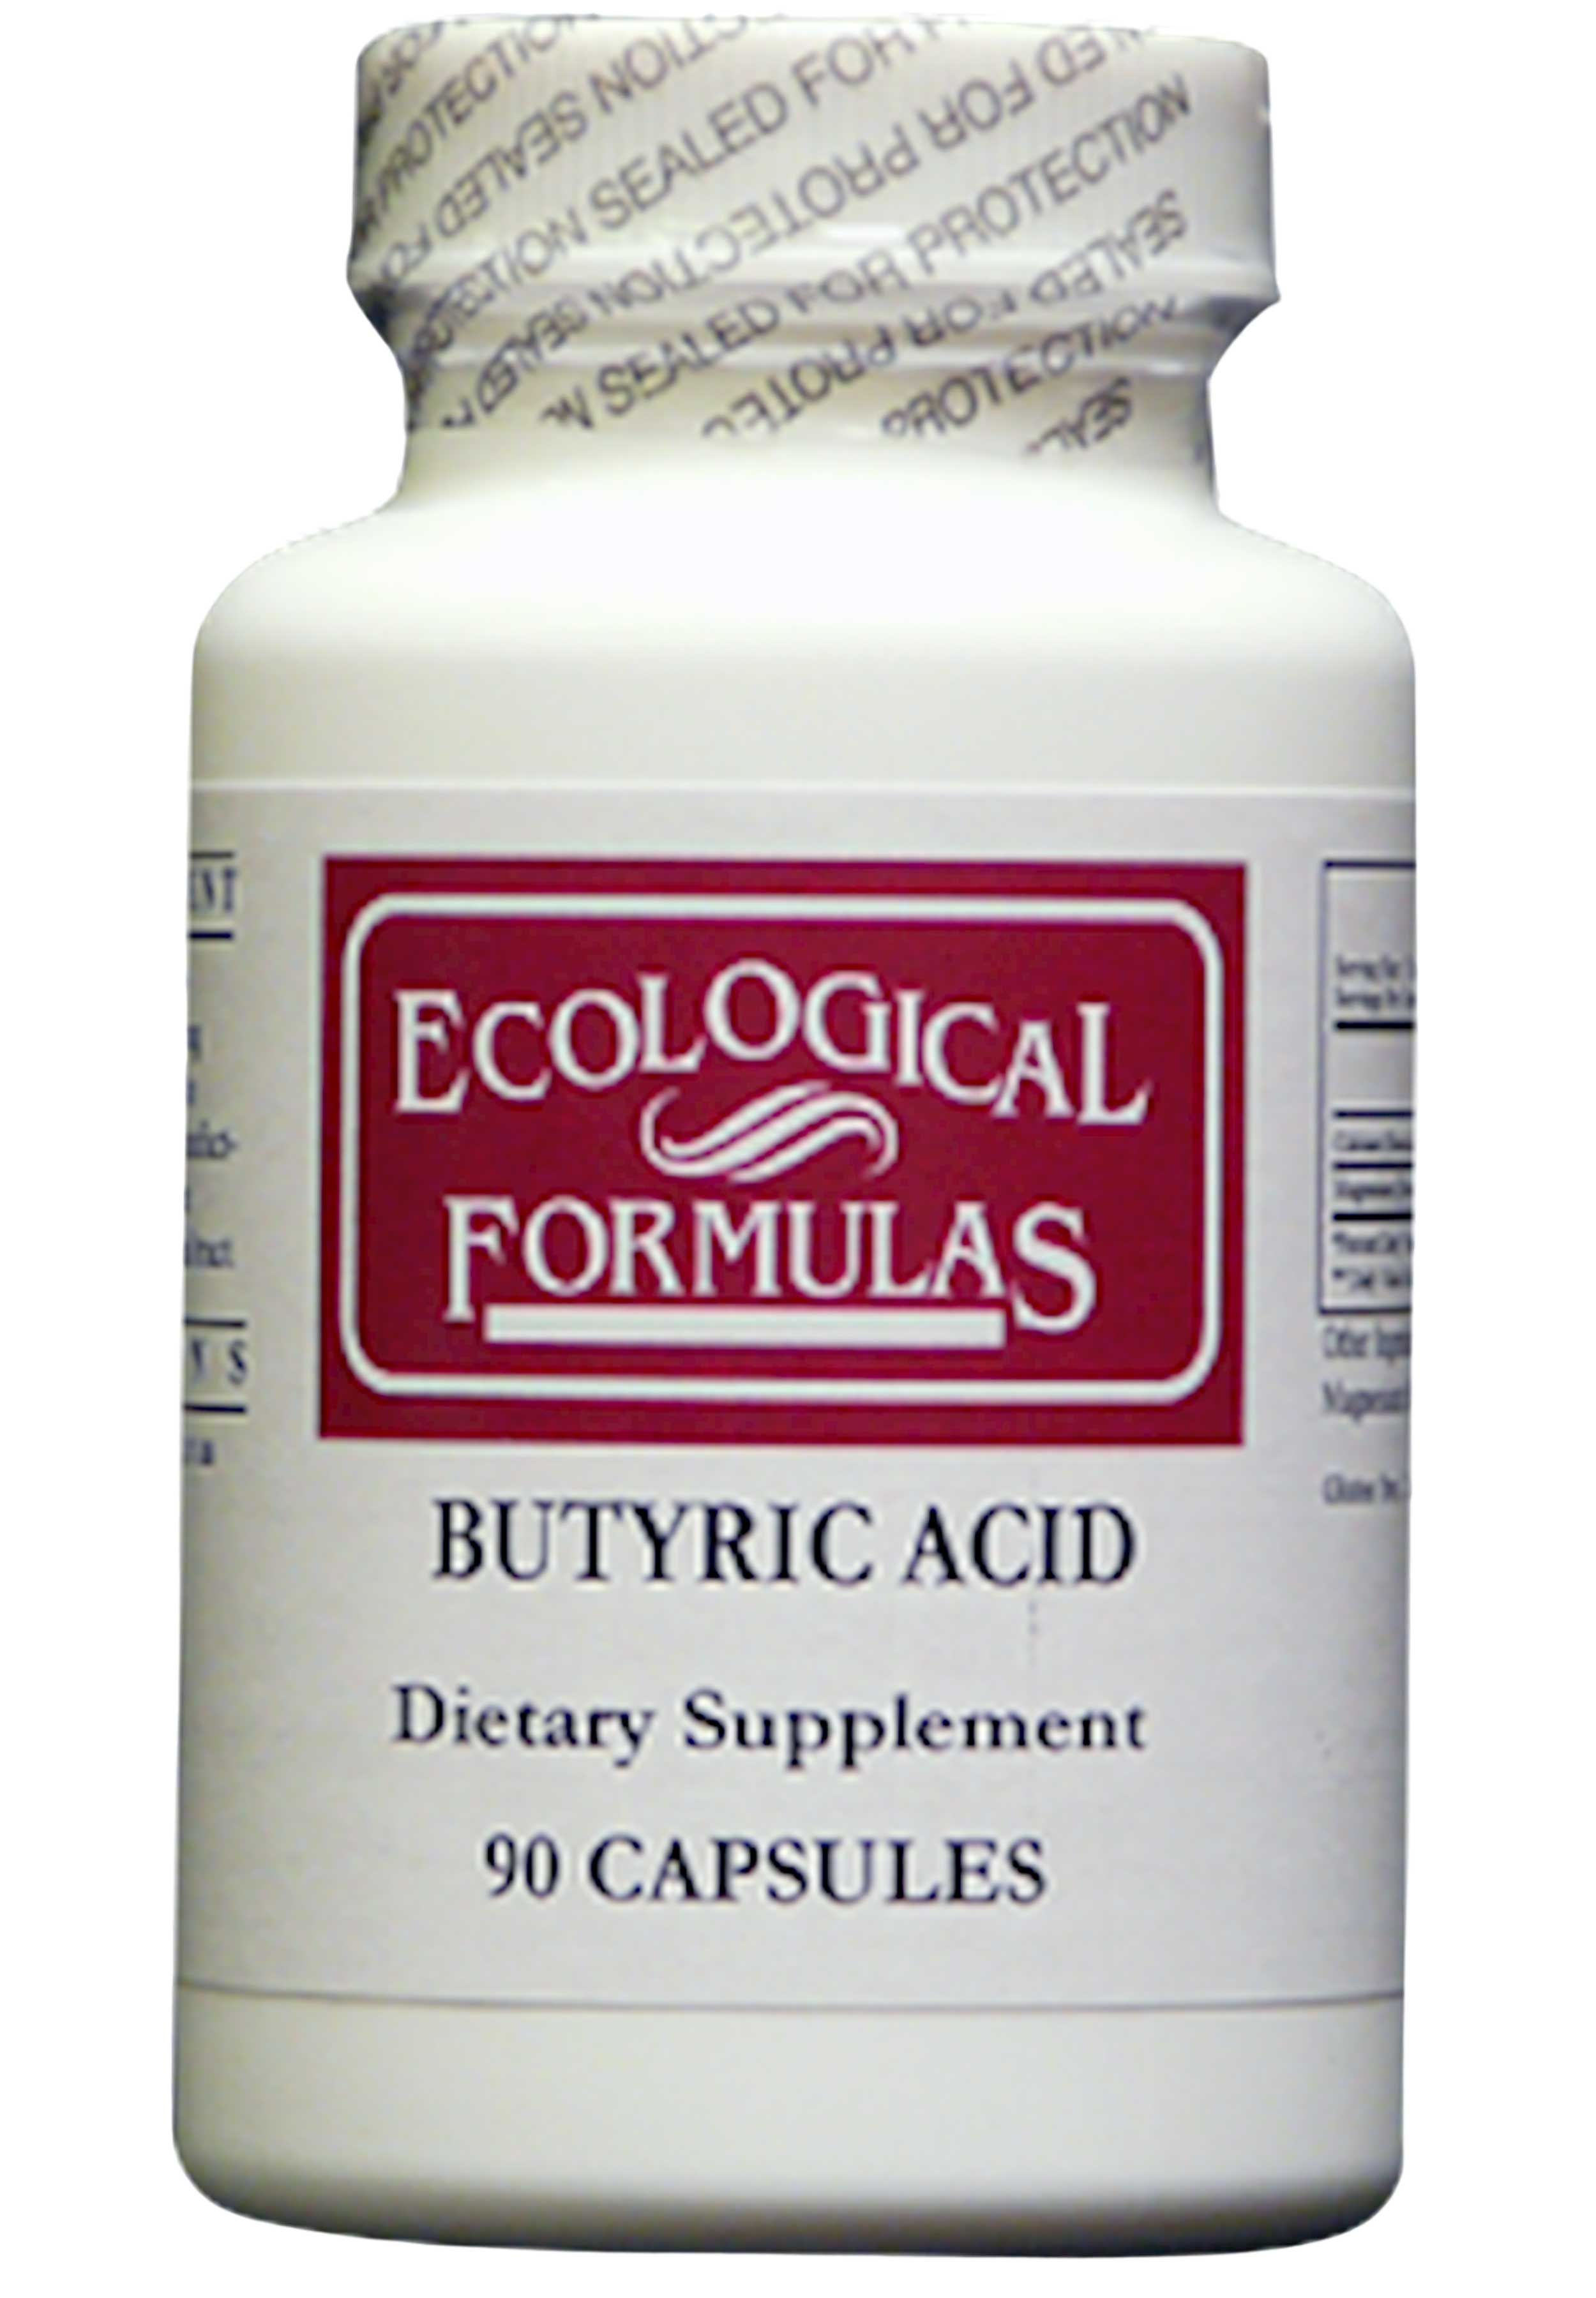 Ecological Formulas/Cardiovascular Research Butyric Acid